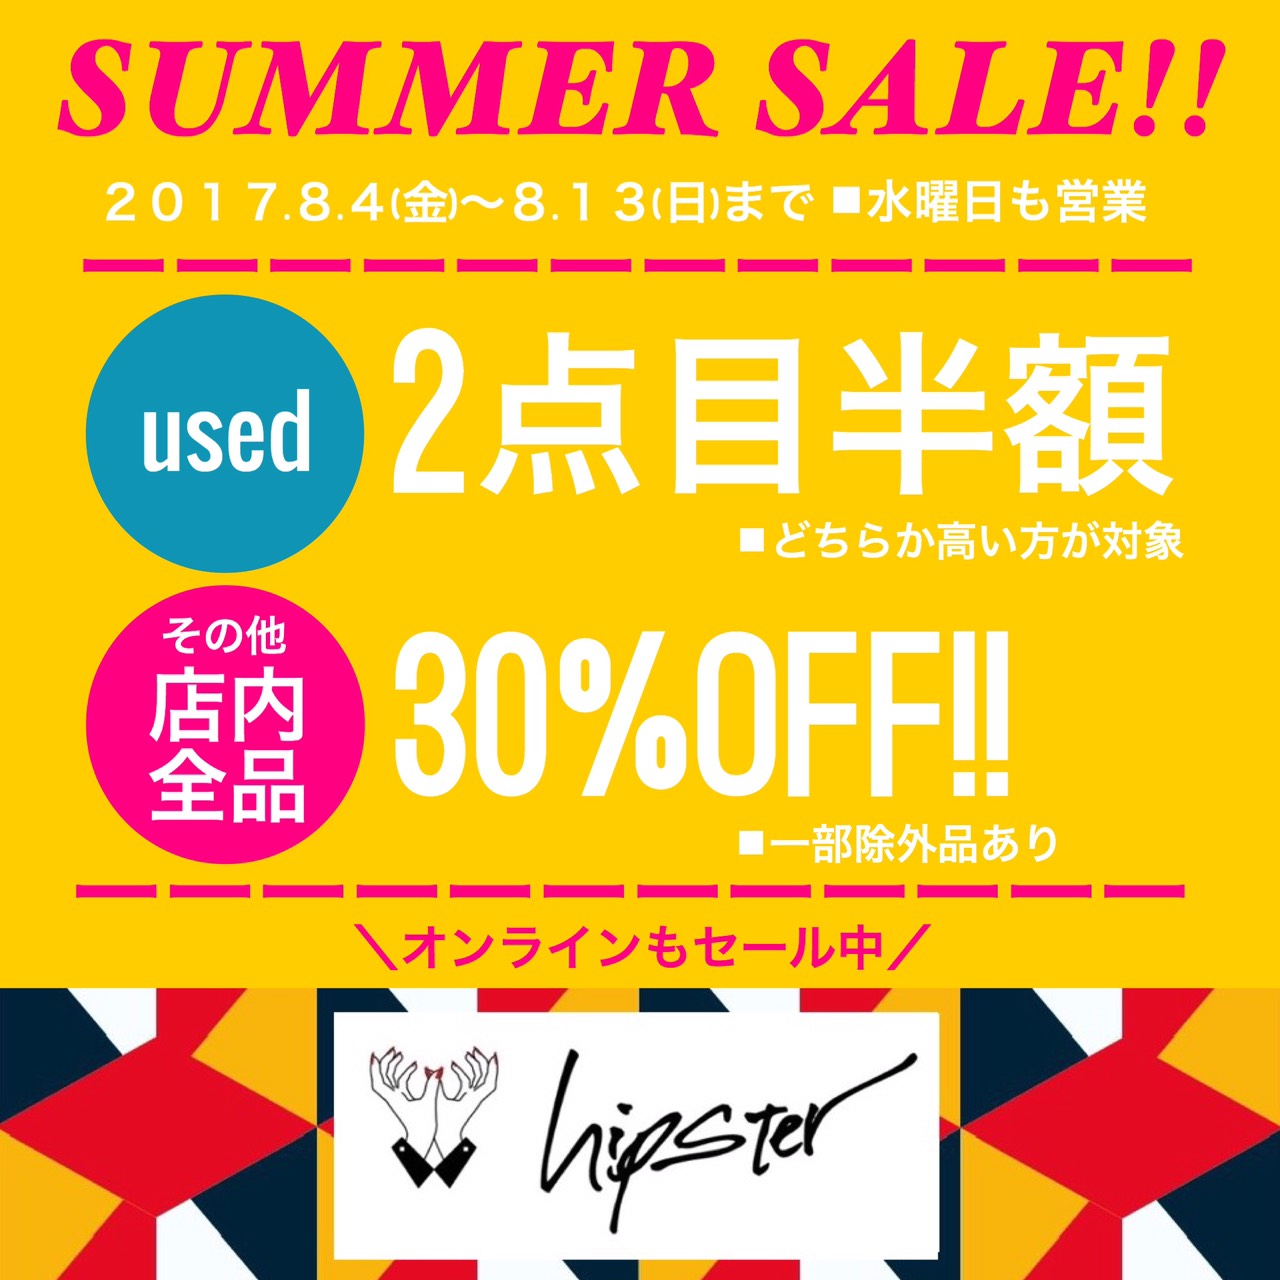 ★☆★☆★hipster summer sale★☆★☆★